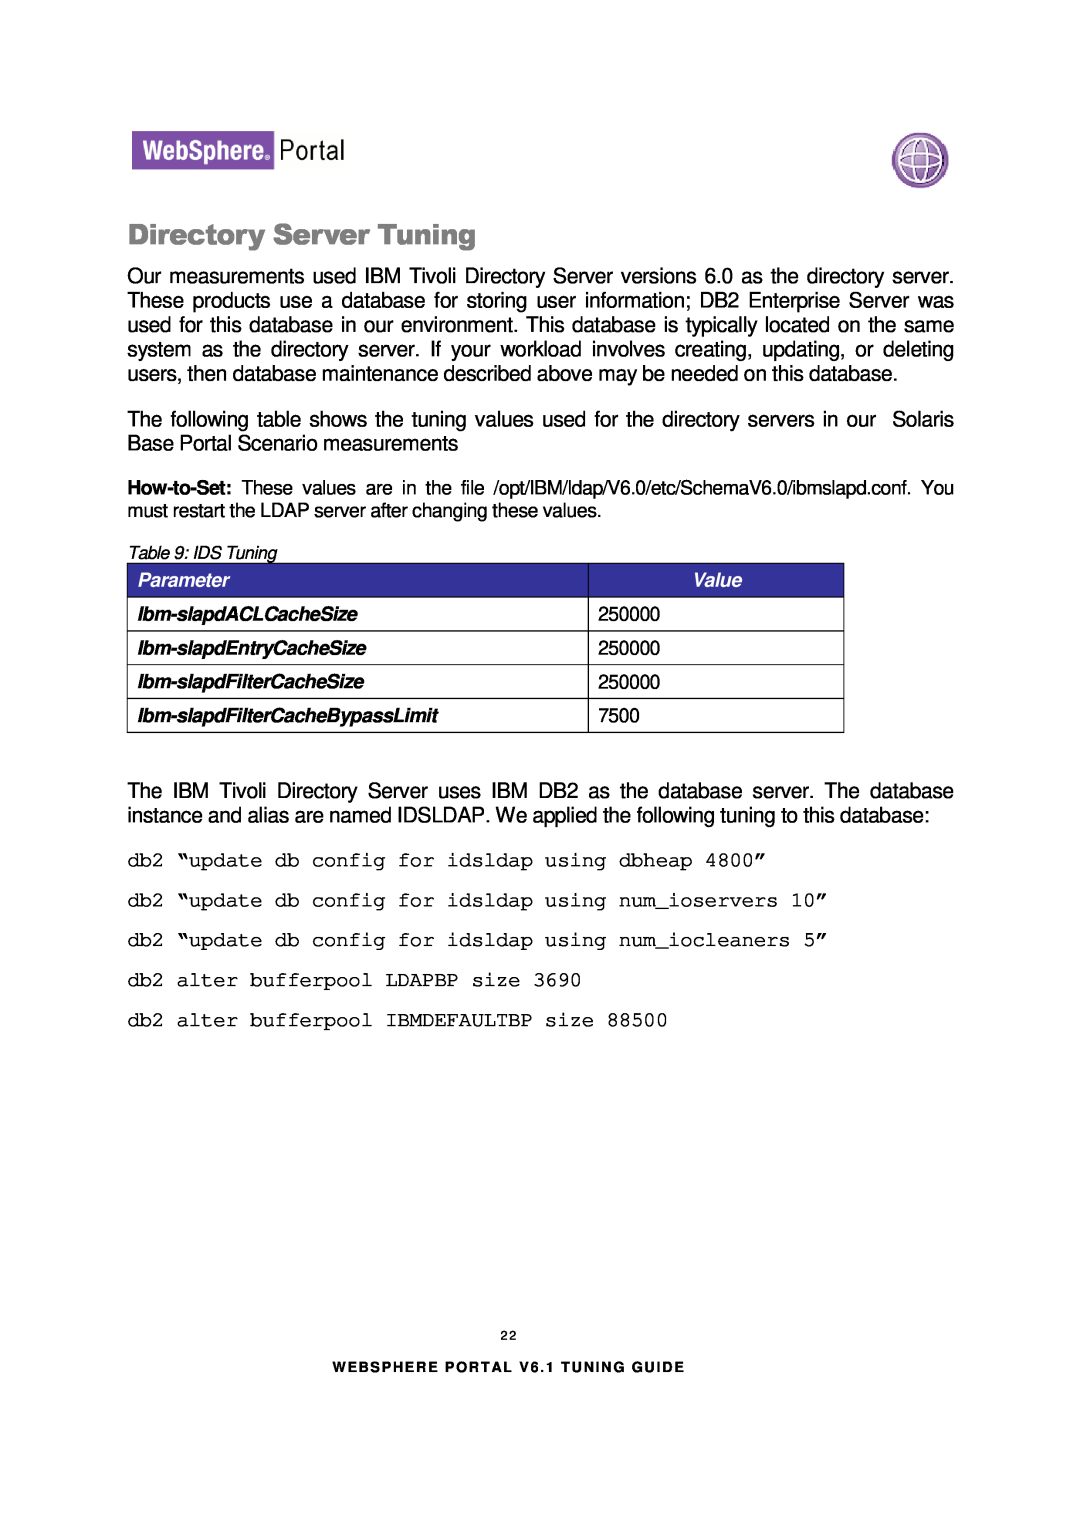 IBM 6.1.X manual Directory Server Tuning, db2 “update db config for idsldap using dbheap 4800” 